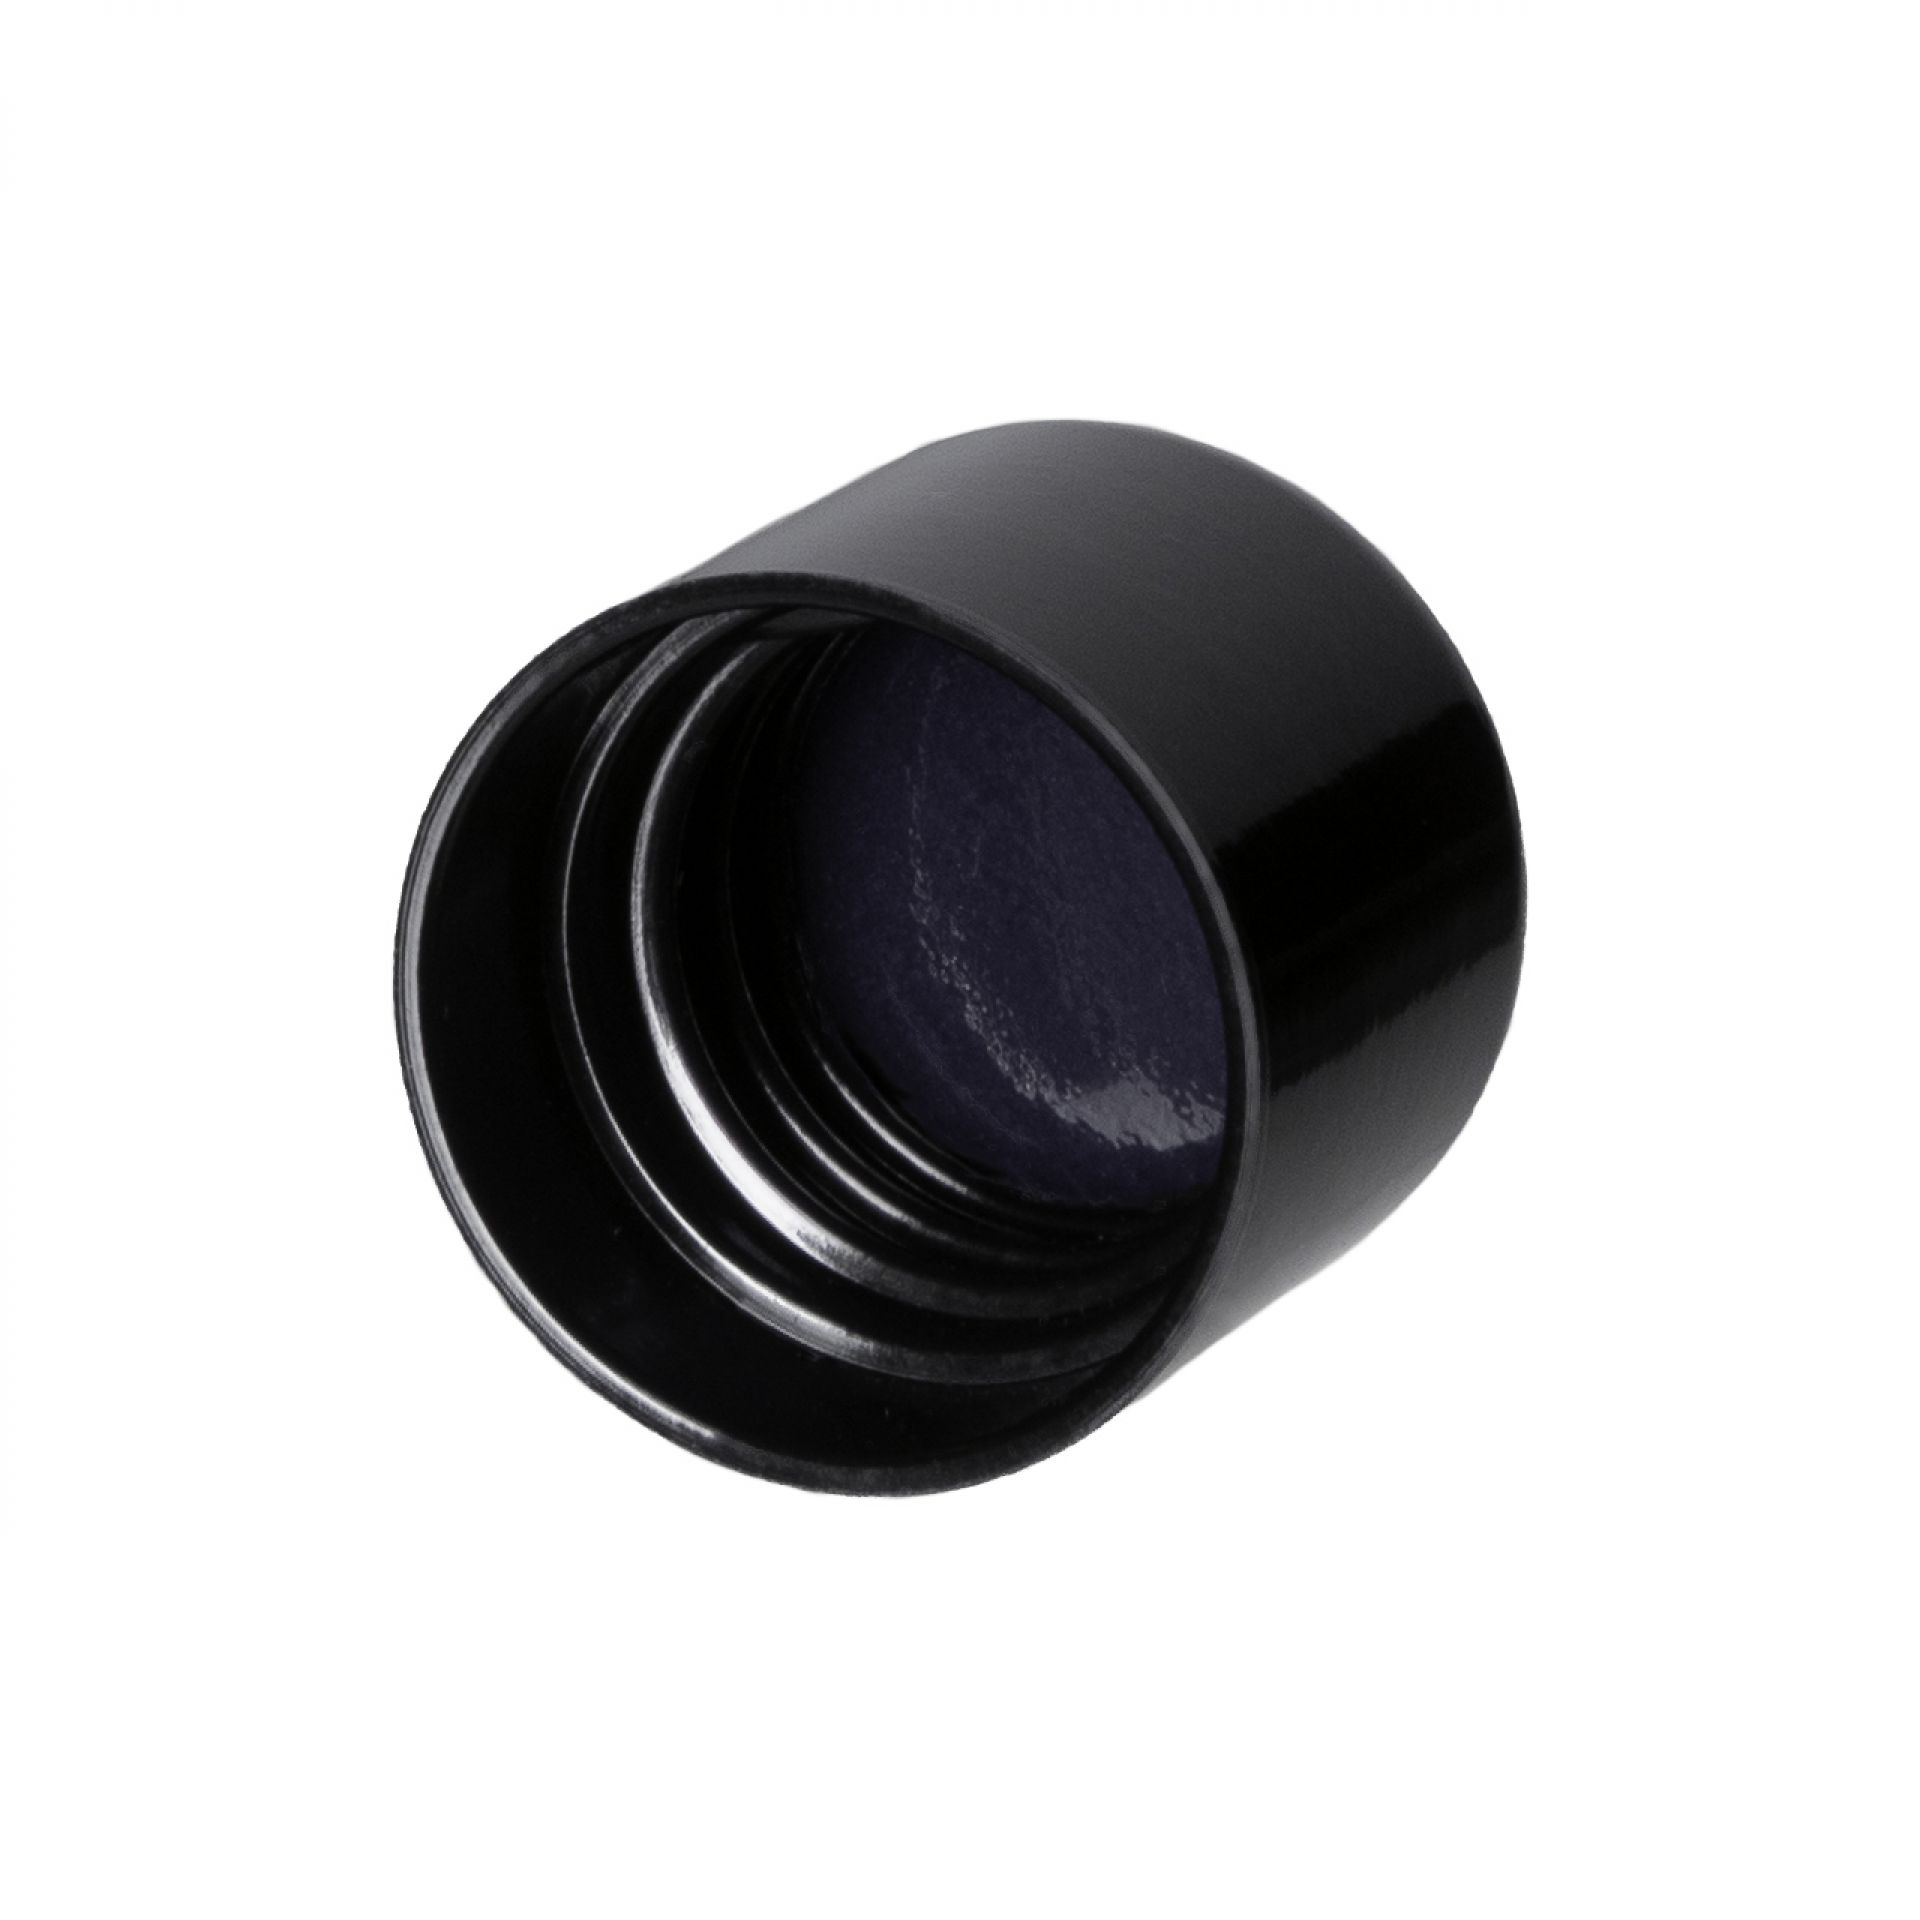 Screw cap DIN18, Urea, black, semi-glossy finish, violet Phan inlay (Orion)